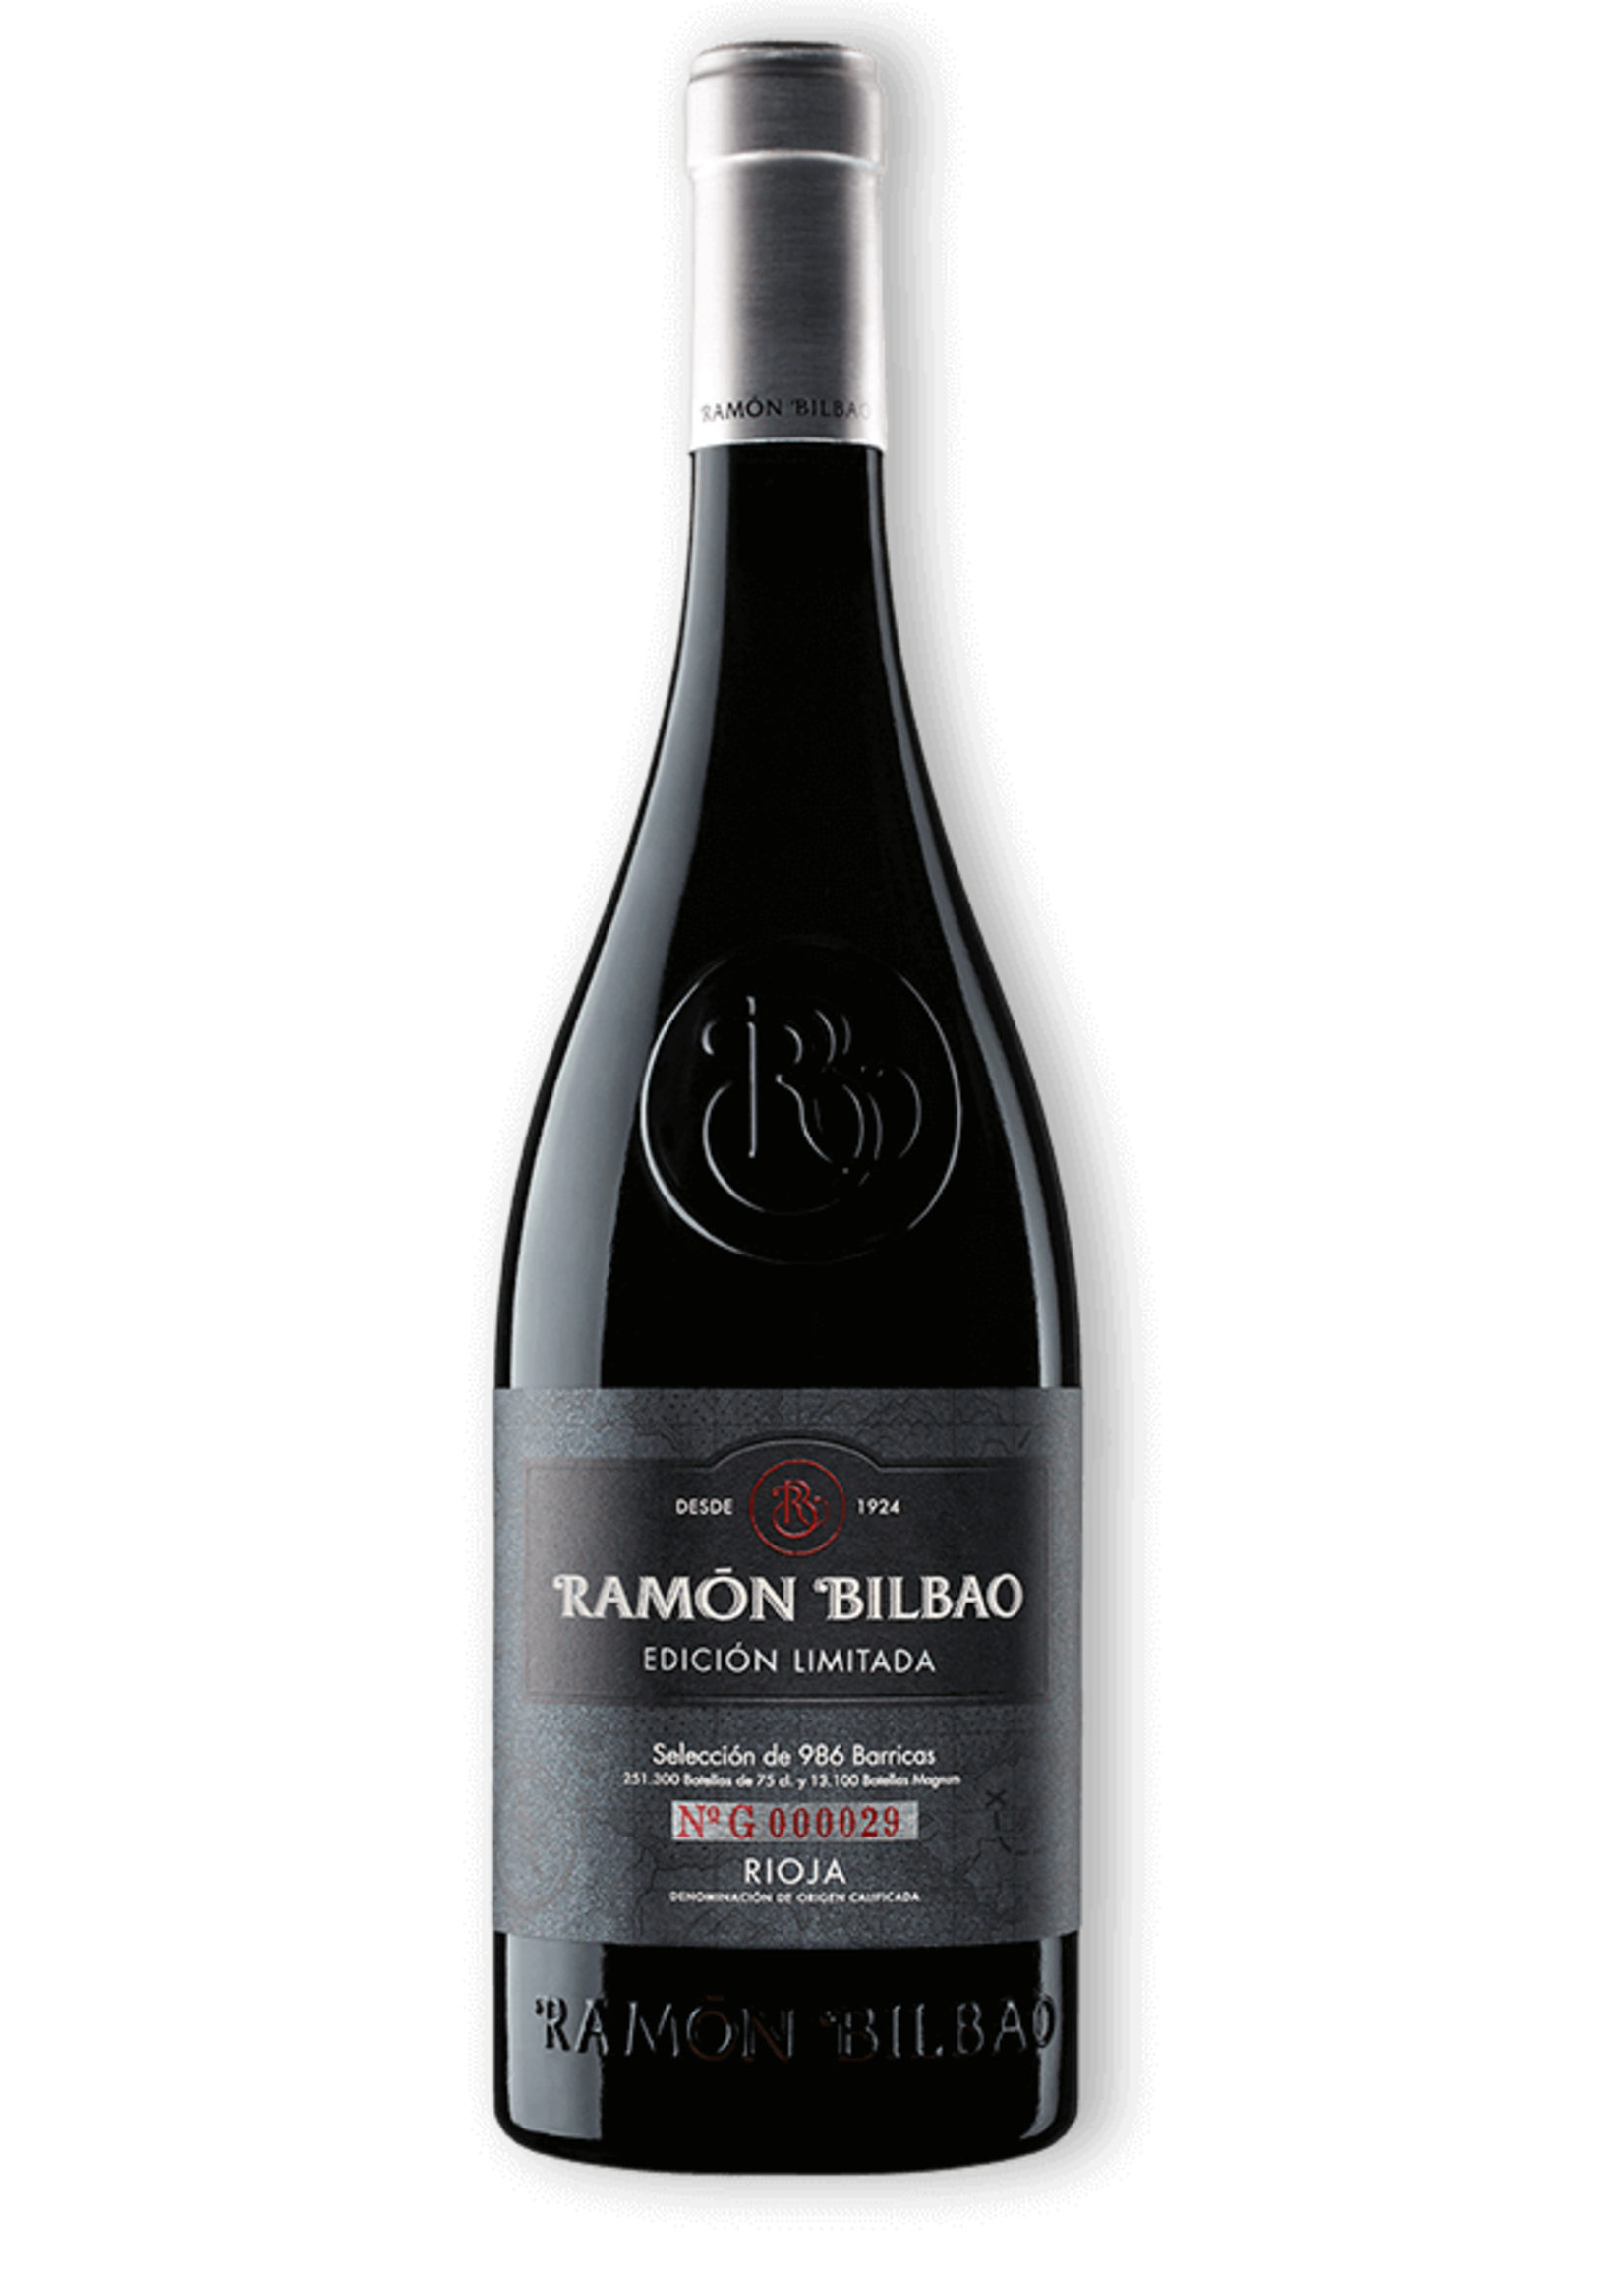 RAMON BILBAO RAMON BILBAO	LIMITED EDITION TEMPRANILLO RIOJA	.750L